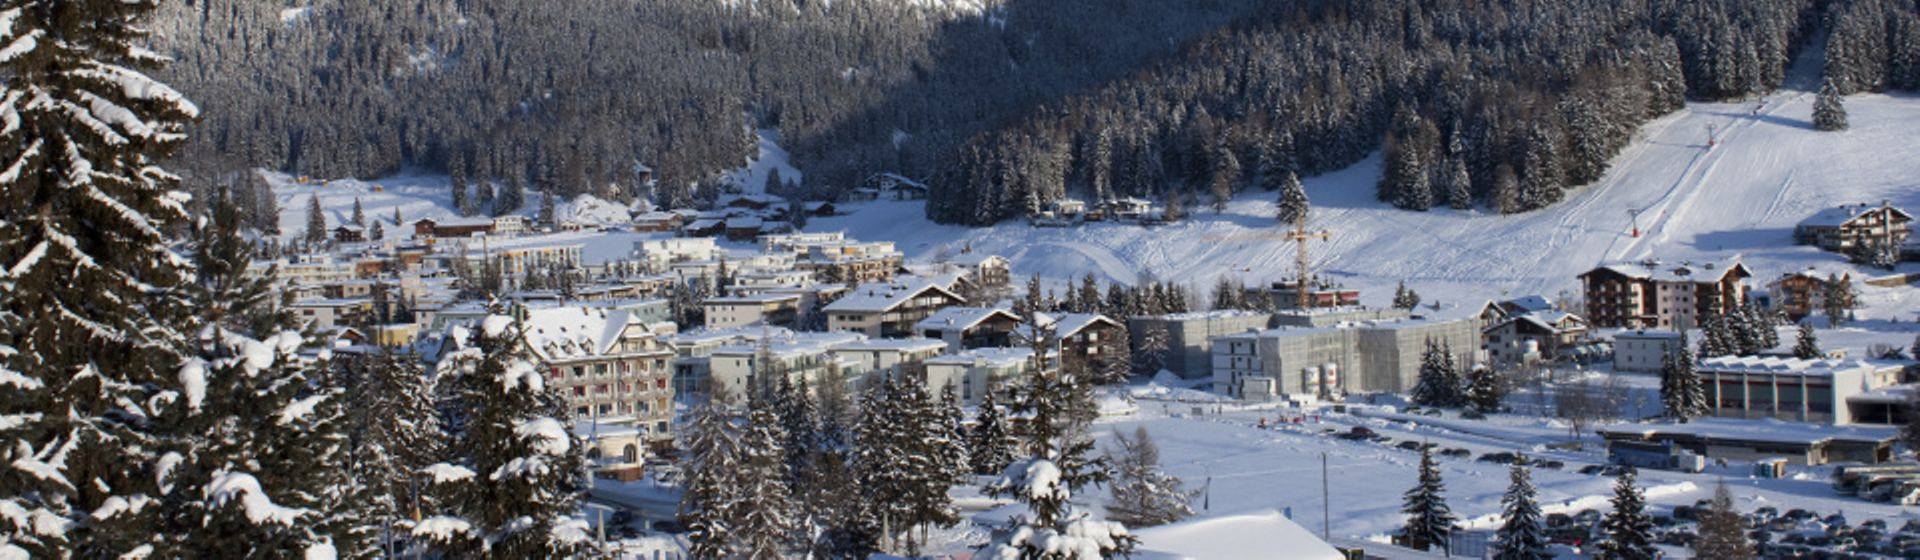 Holidays to Davos Image